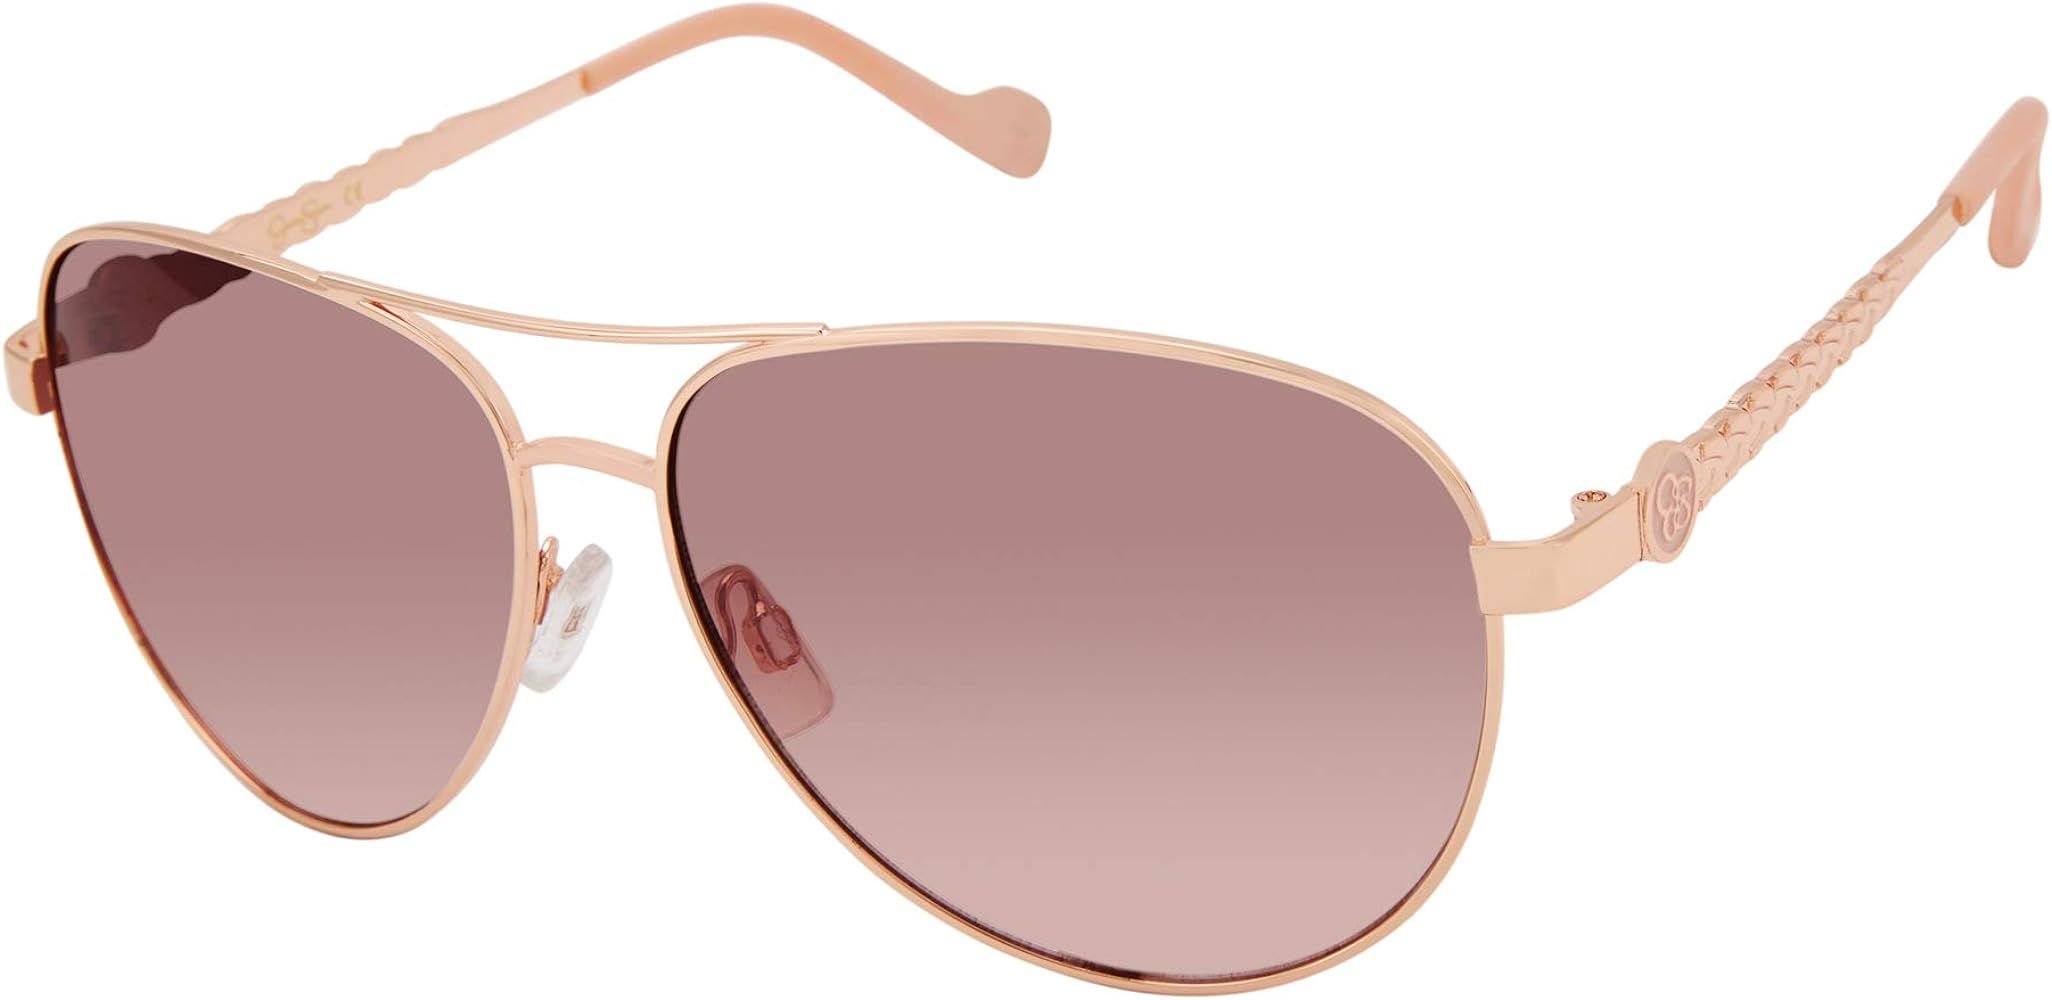 Women's J5702 Metal Aviator Sunglasses with 100% UV Protection, 60 mm | Amazon (US)